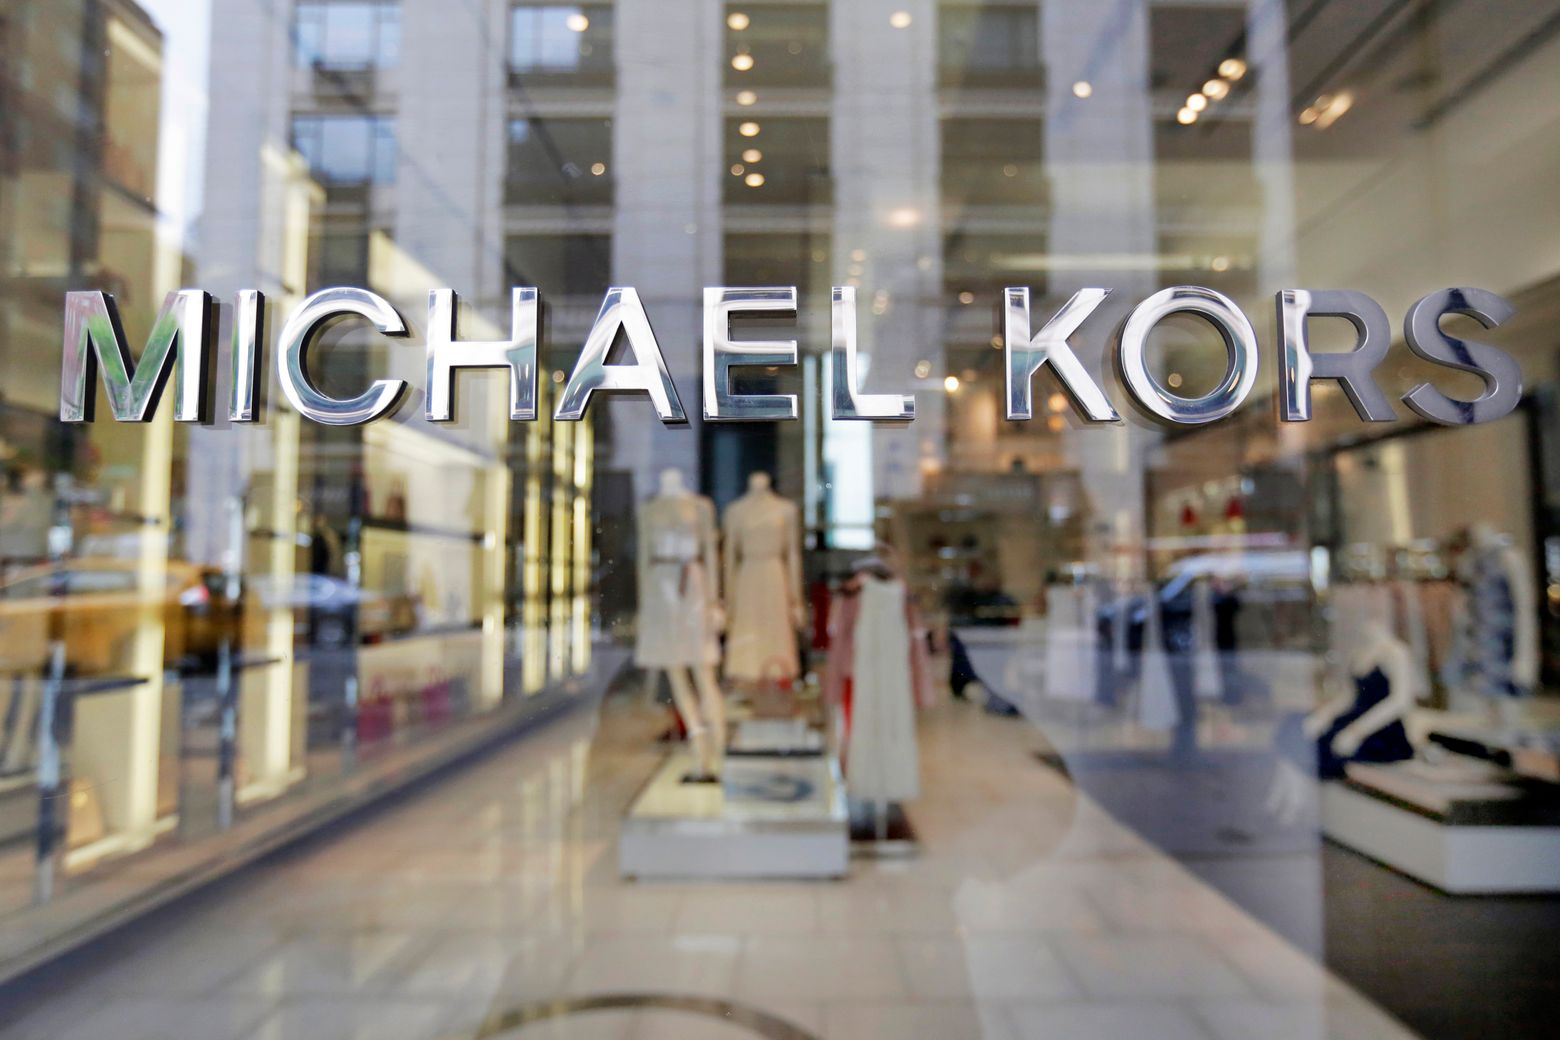 Michael Kors Company Information Shop, SAVE 53%.